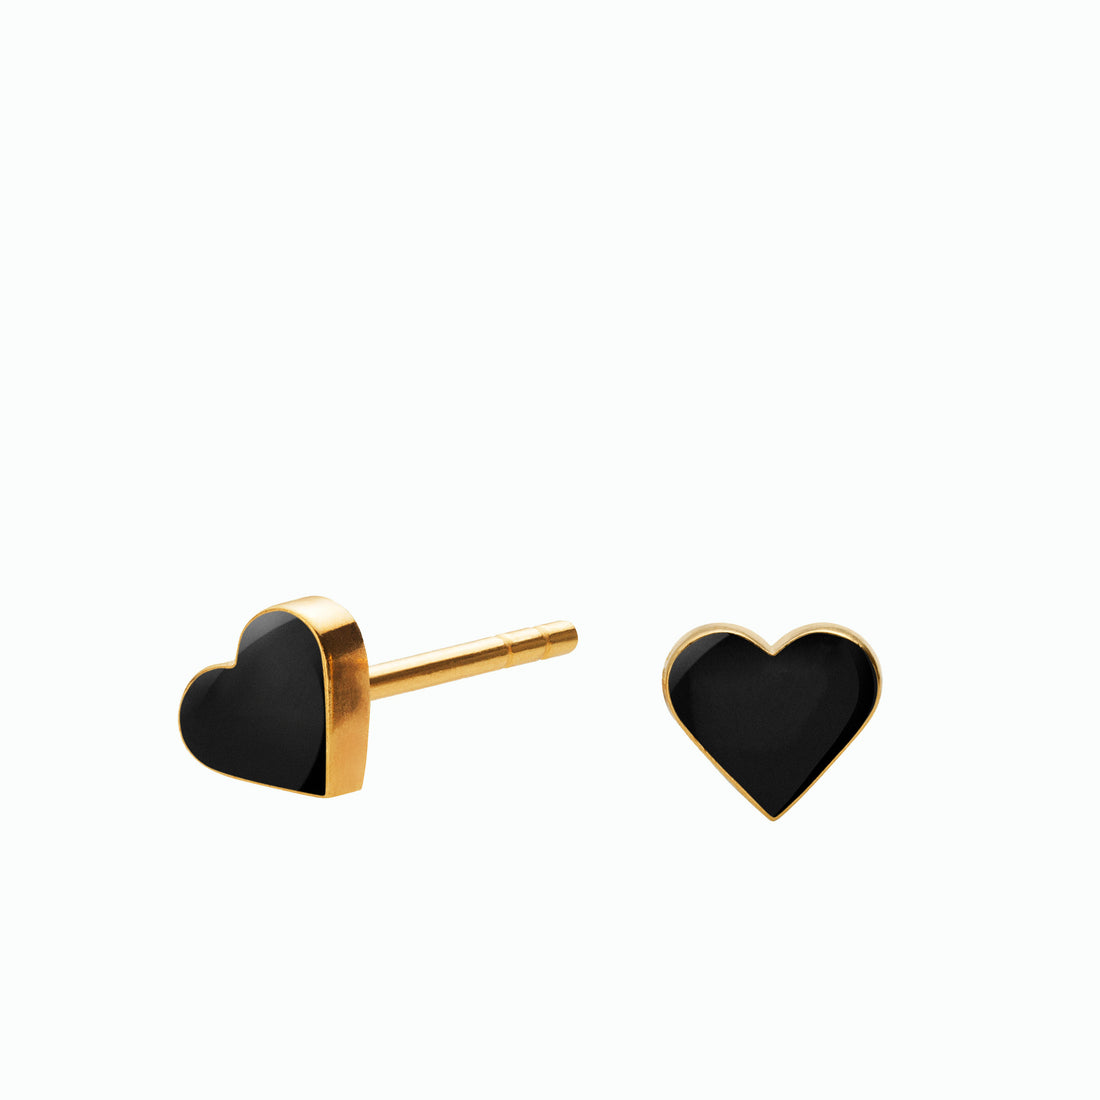 SIGN heart · GOLD · BLACK